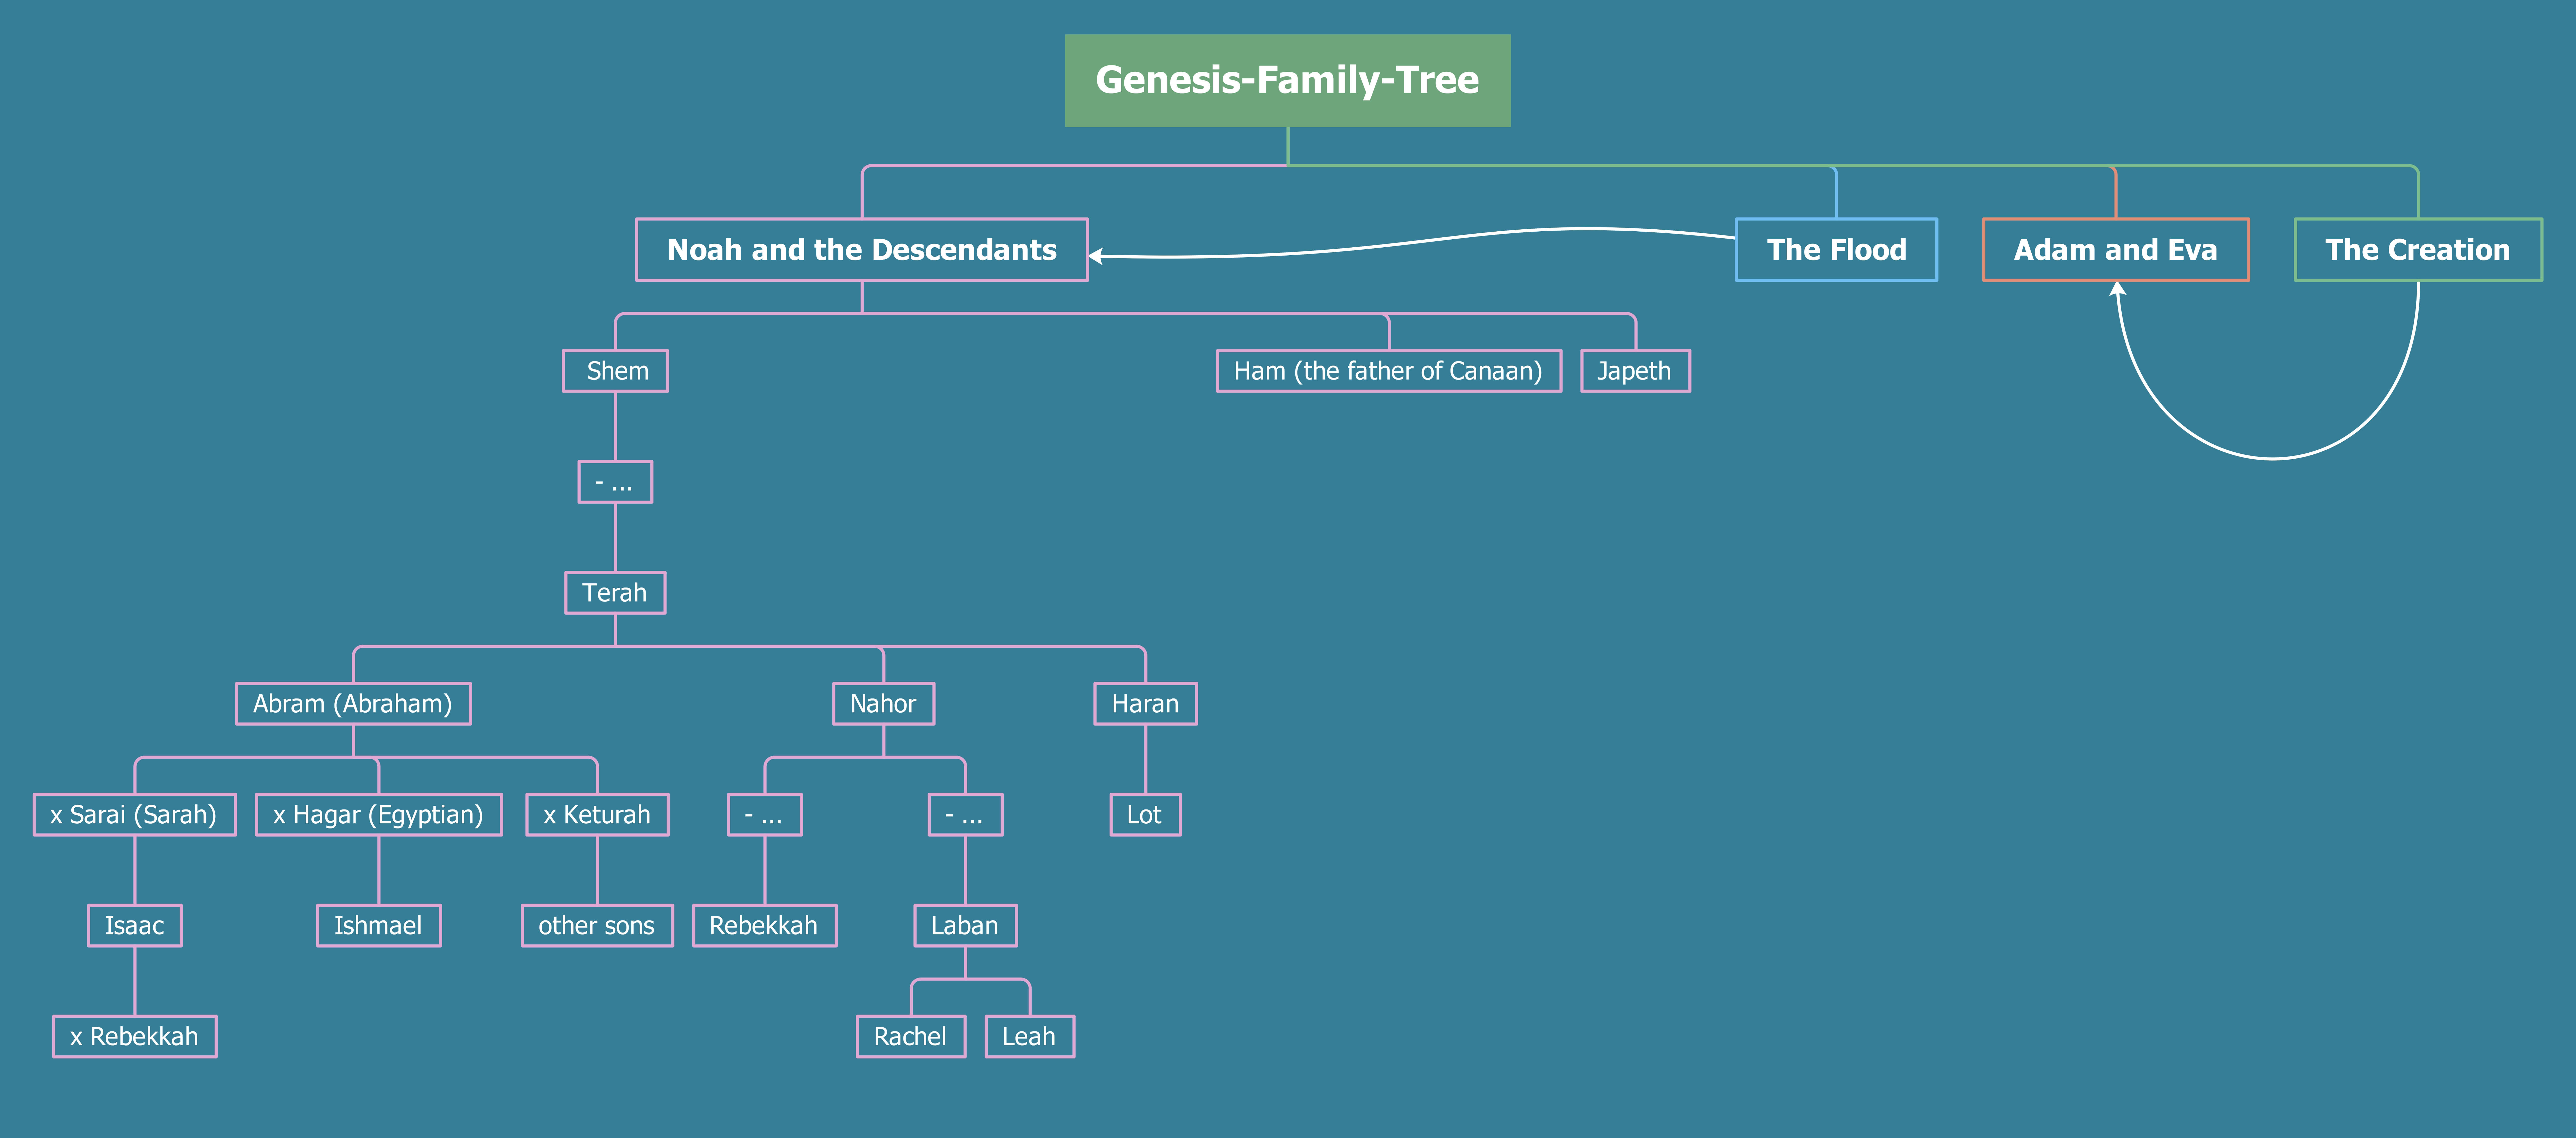 Plantilla de árbol genealógico Génesis